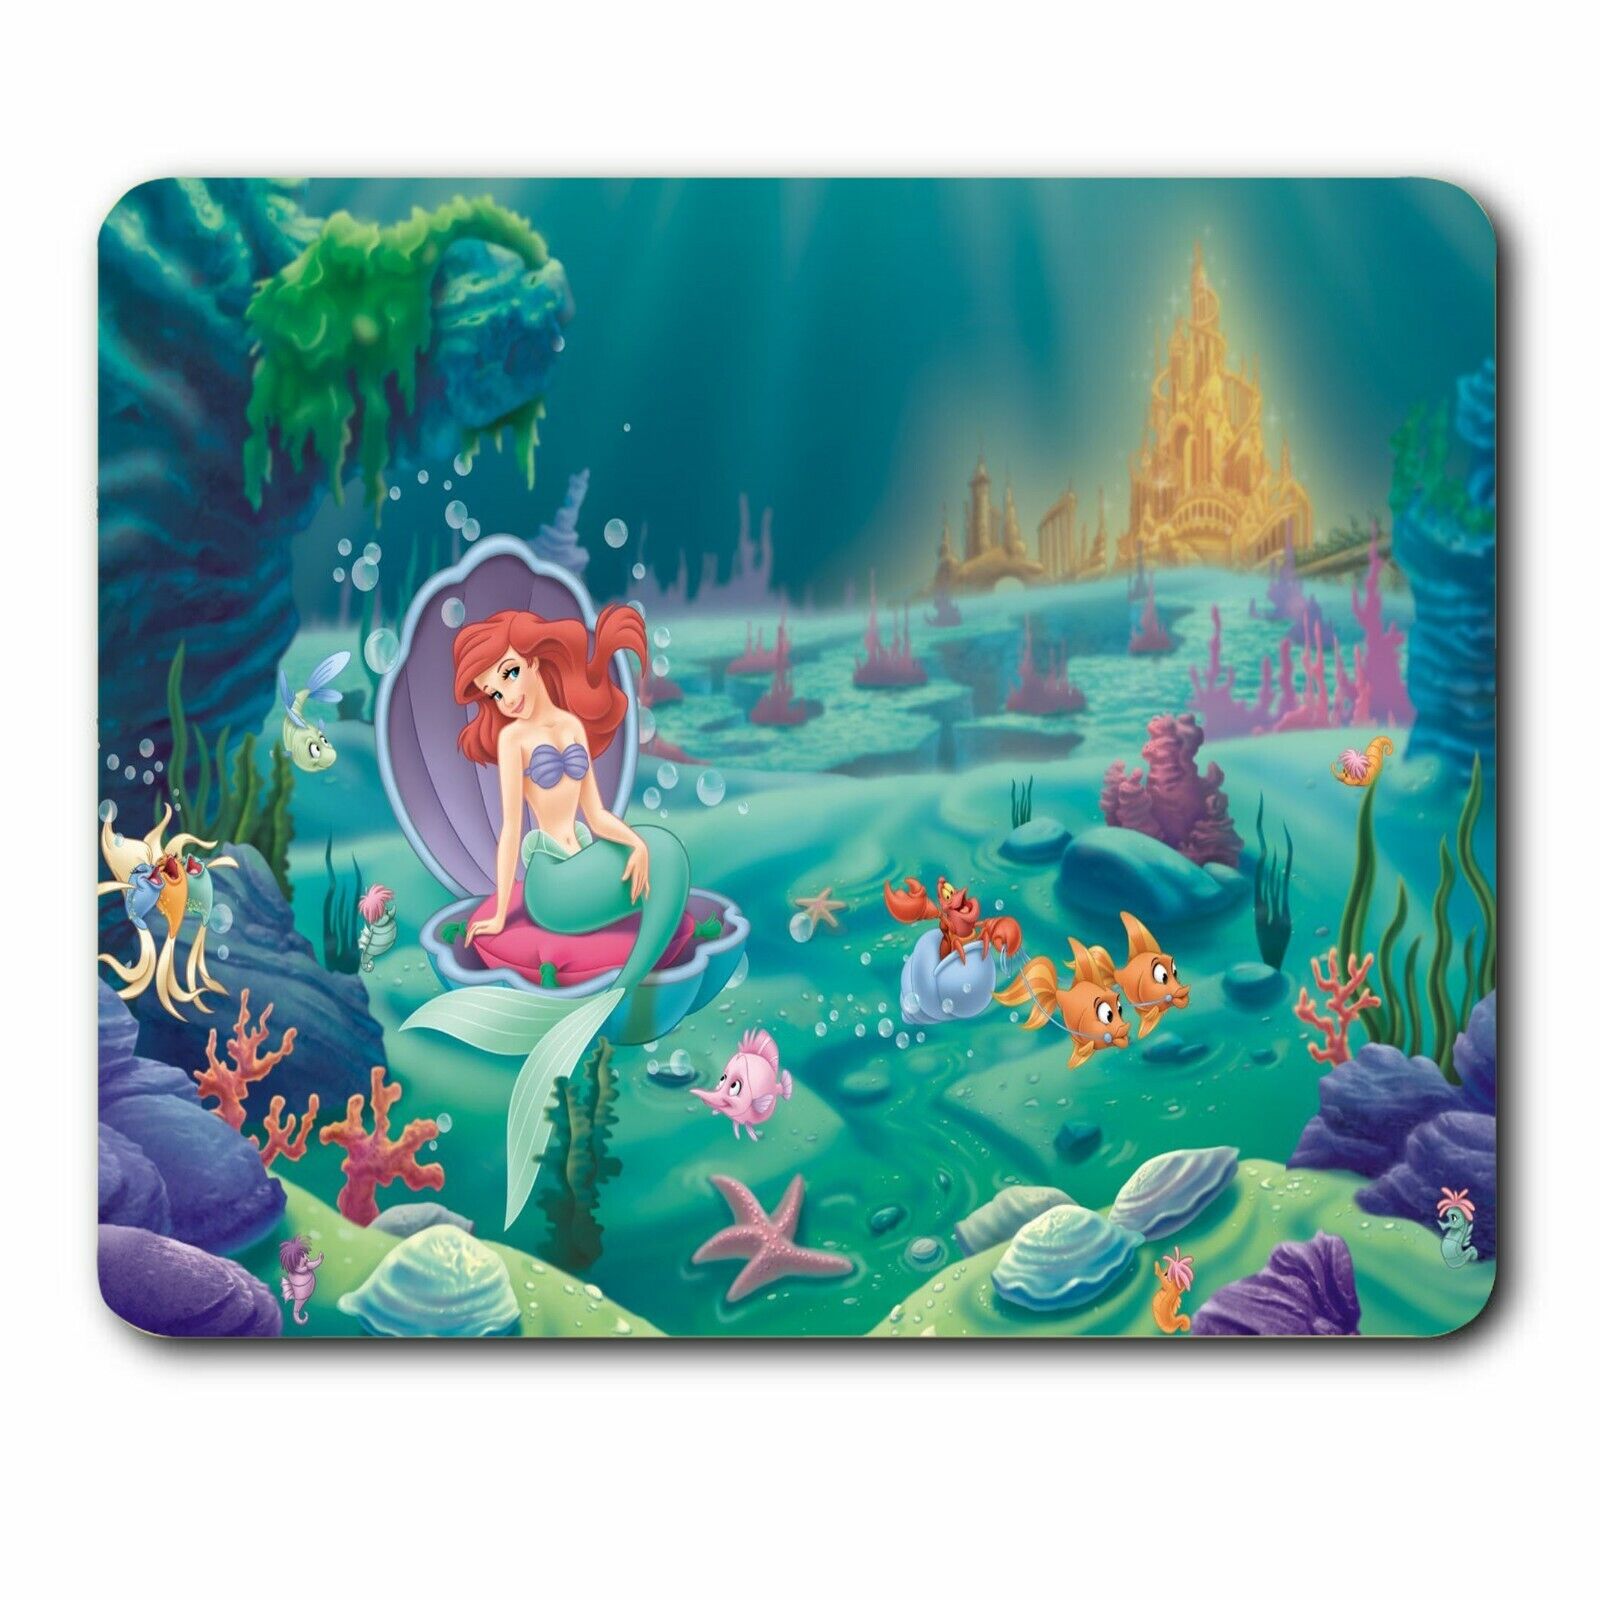 Beauty Princess Ariel Mermaid Princess New Large Mouse pad L14 Gamming Mousepad